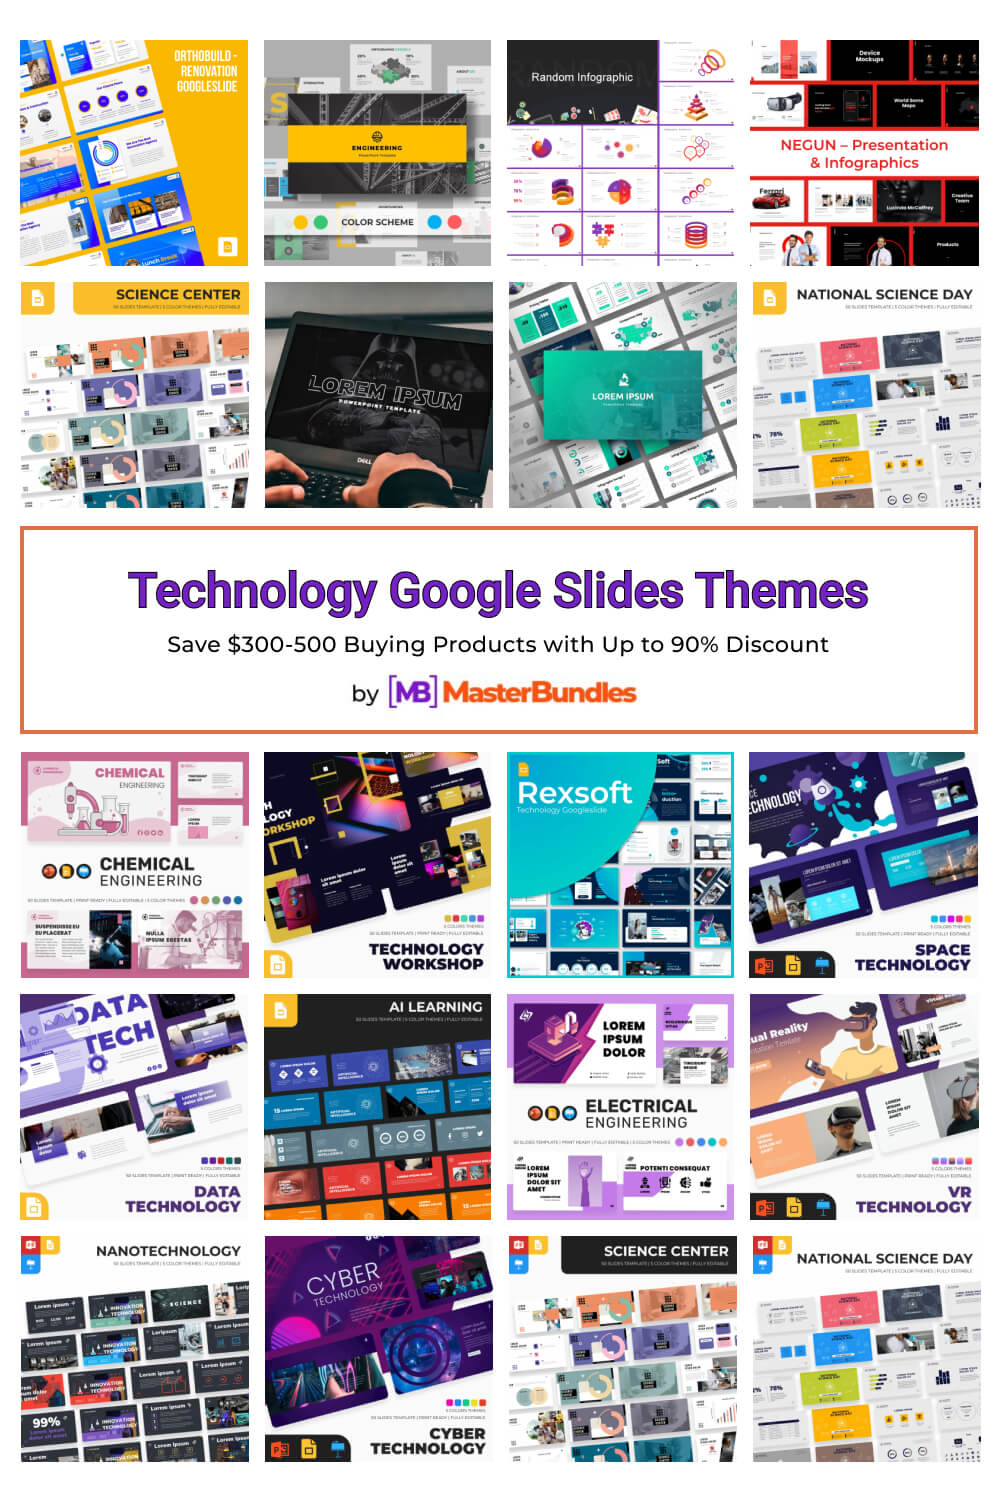 technology google slides themes pinterest image.